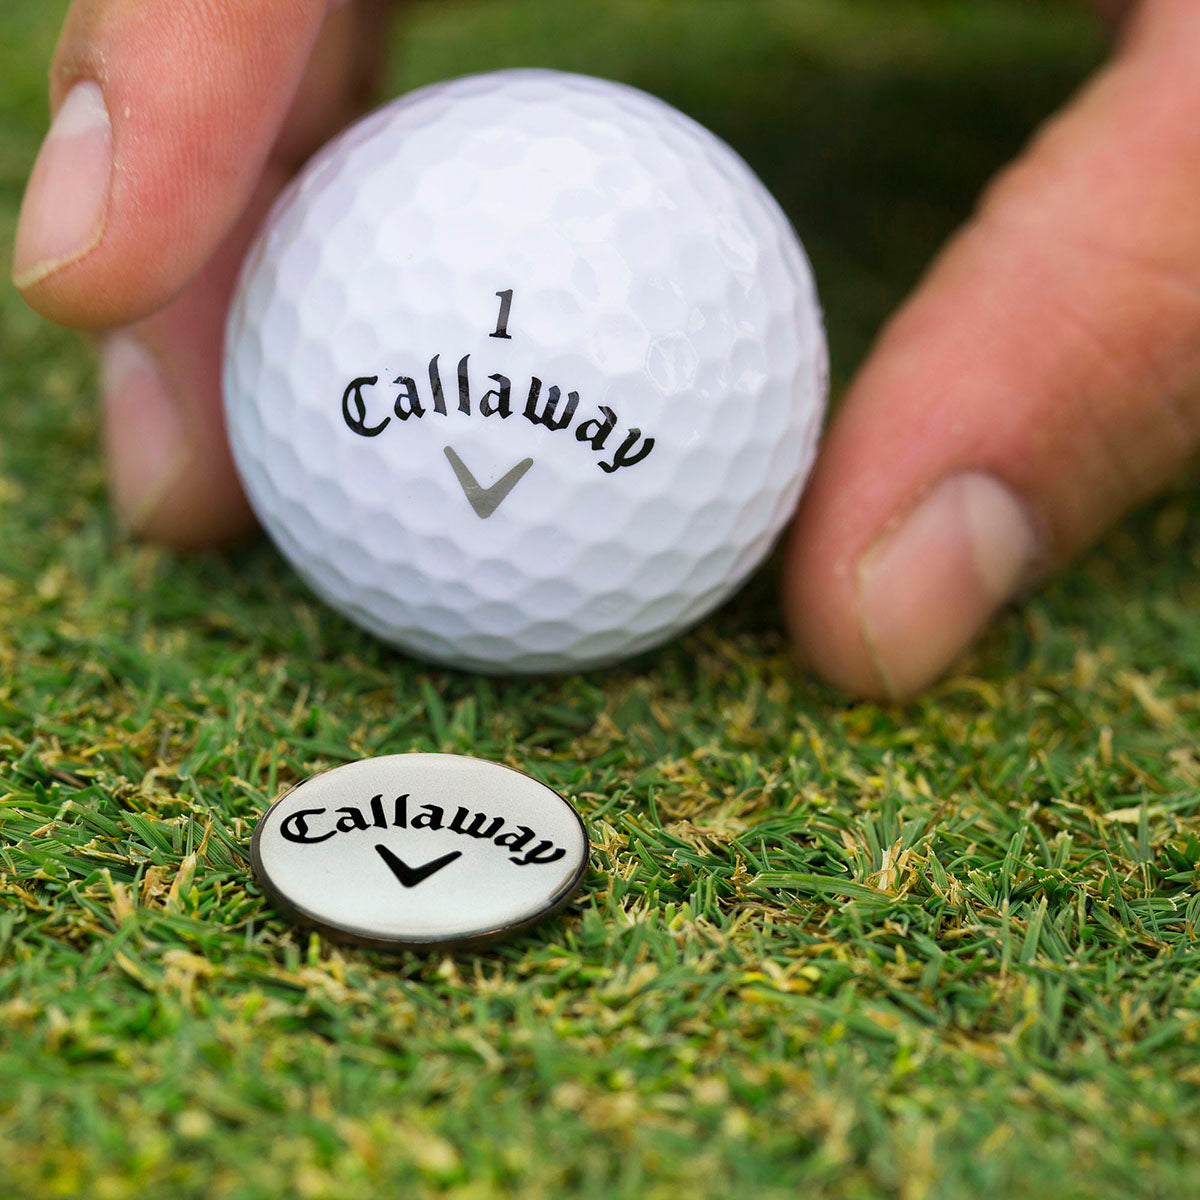 Callaway Divot Repair Tool and Golf Ball Marker - Silver Callaway